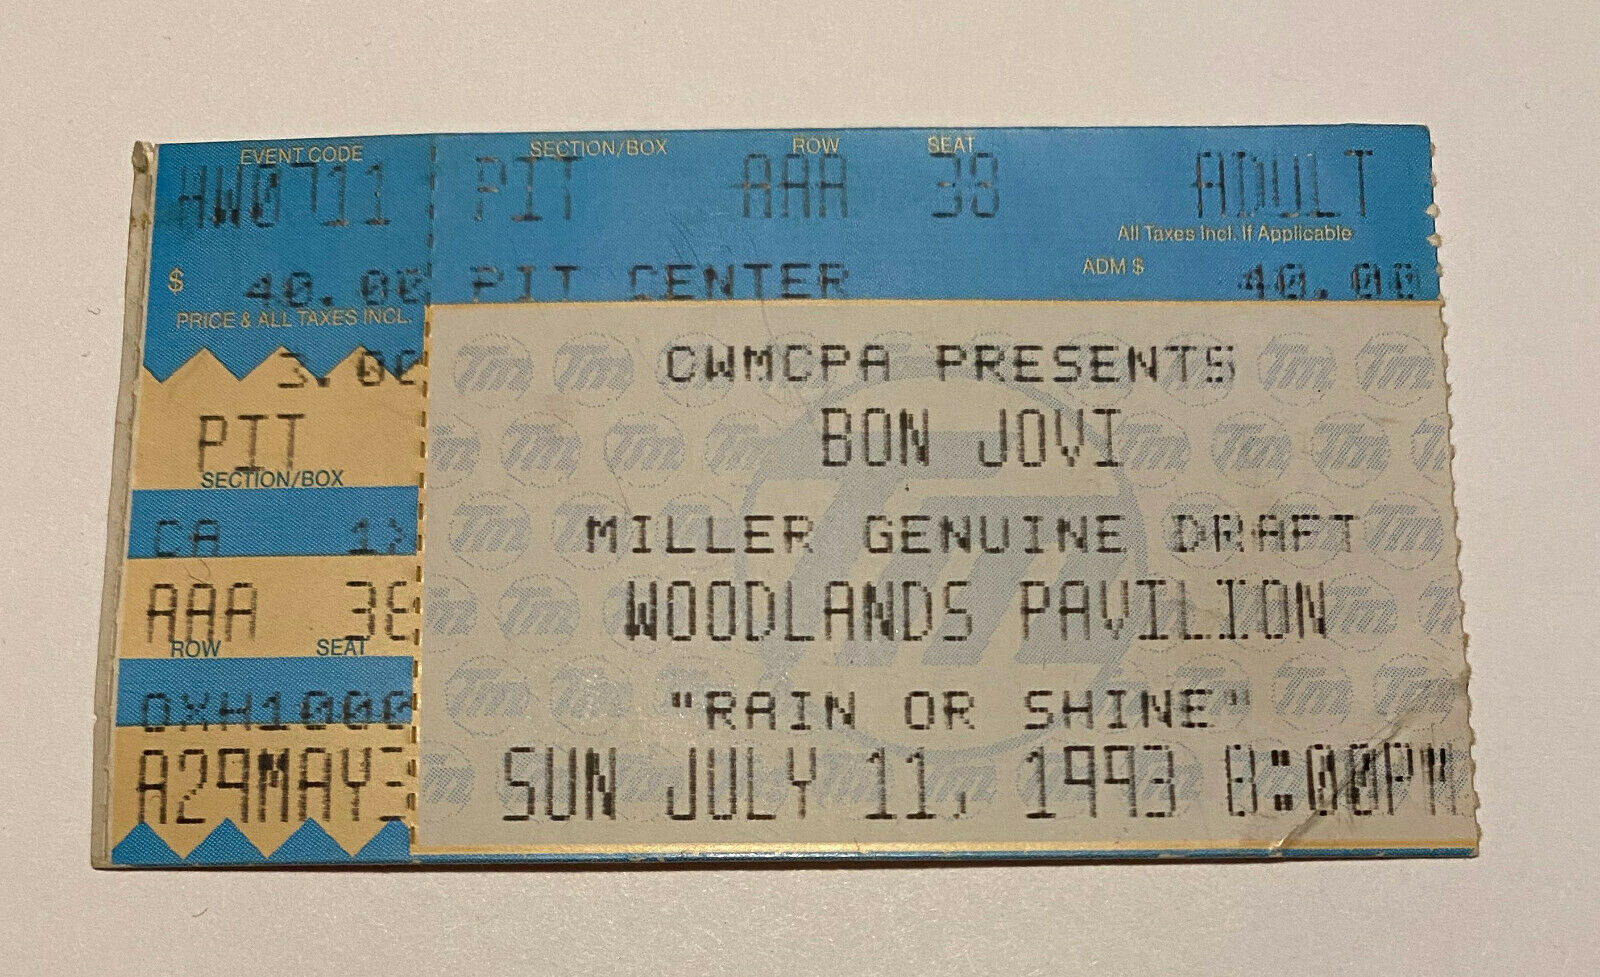 BON JOVI - 7/11/1993 Woodlands Pavilion Concert Ticket Stub Houston, Texas